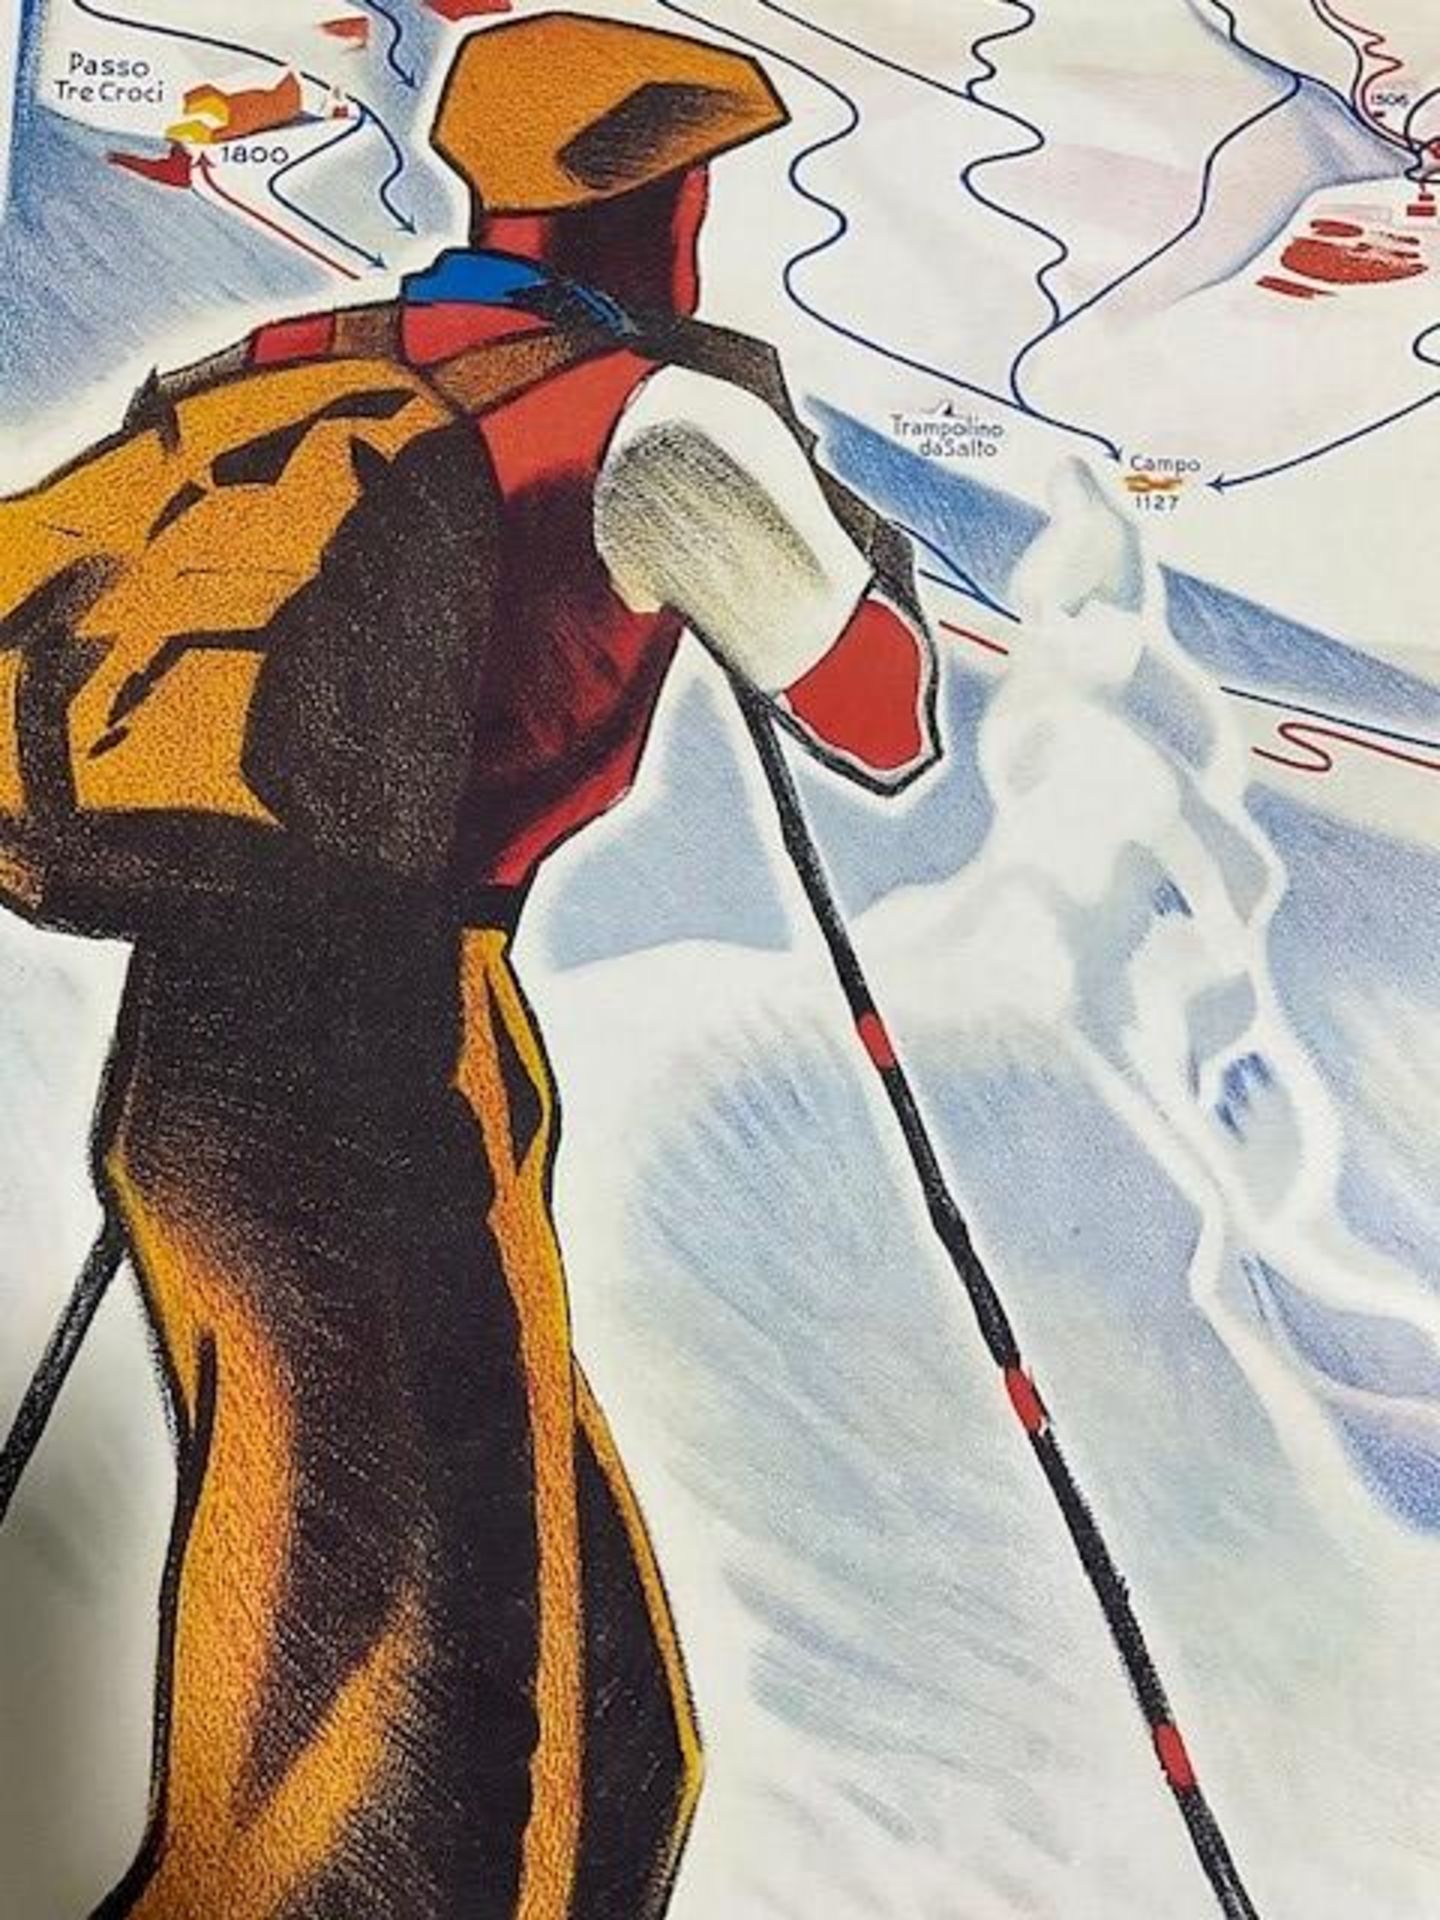 Dolomiti Cortina Italian Ski Poster - Image 5 of 10